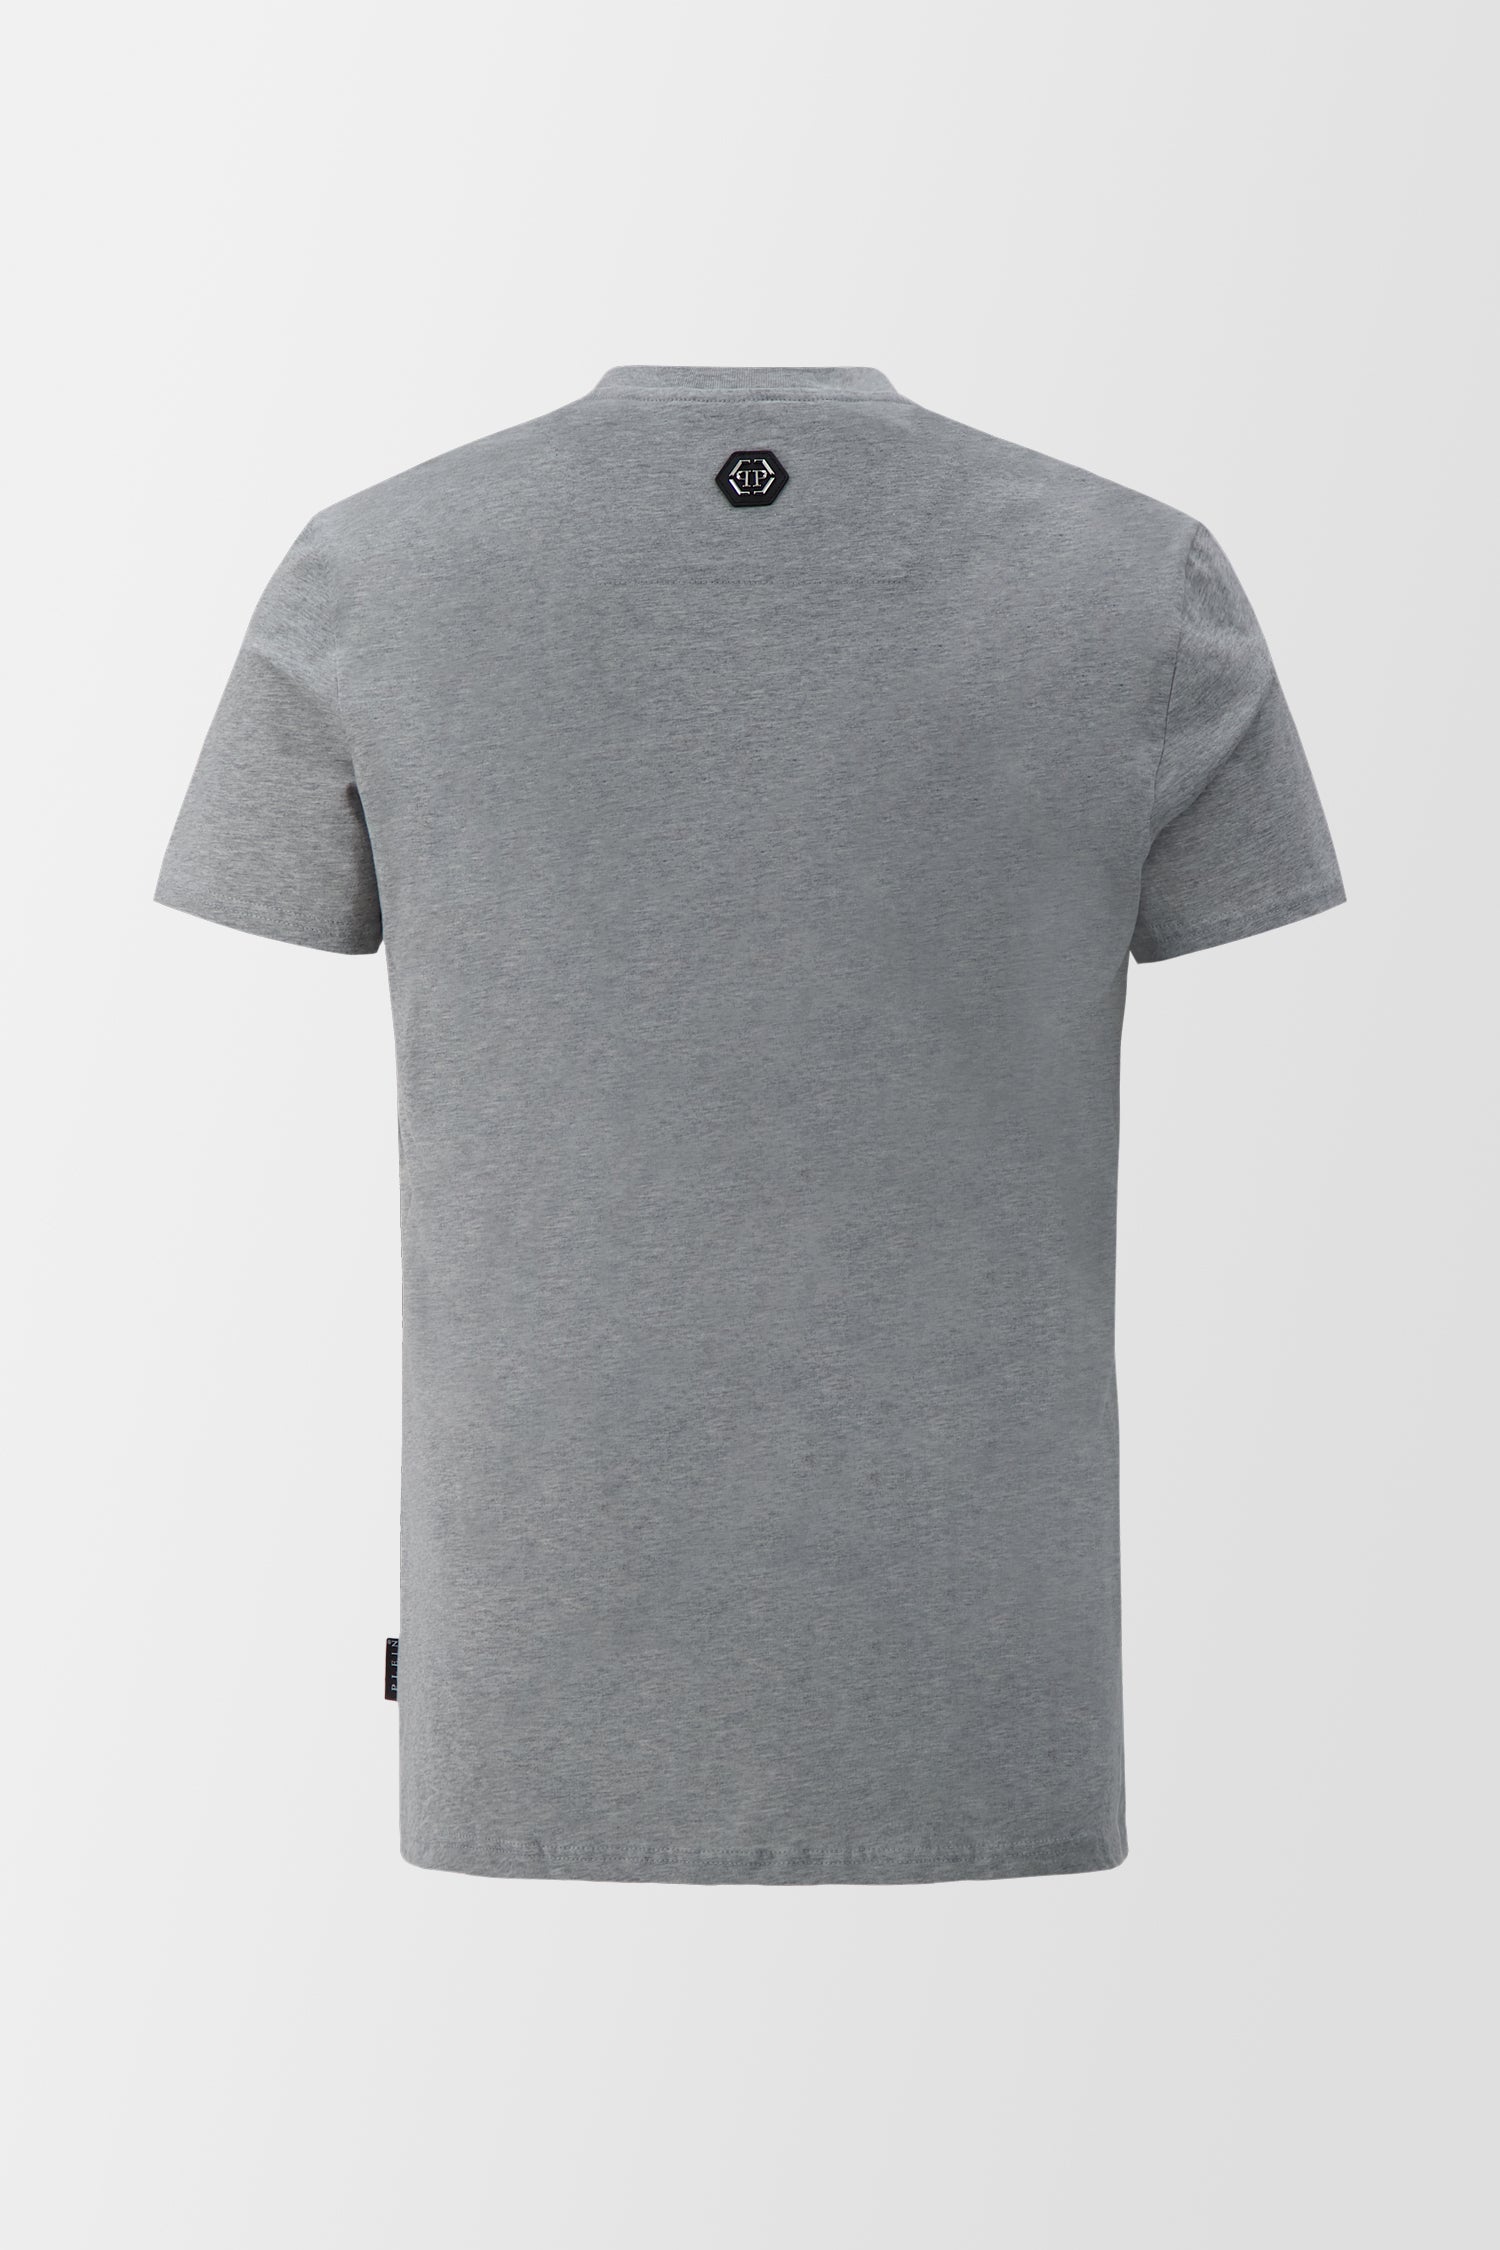 Philipp Plein Grey SS Hexagon T-Shirt